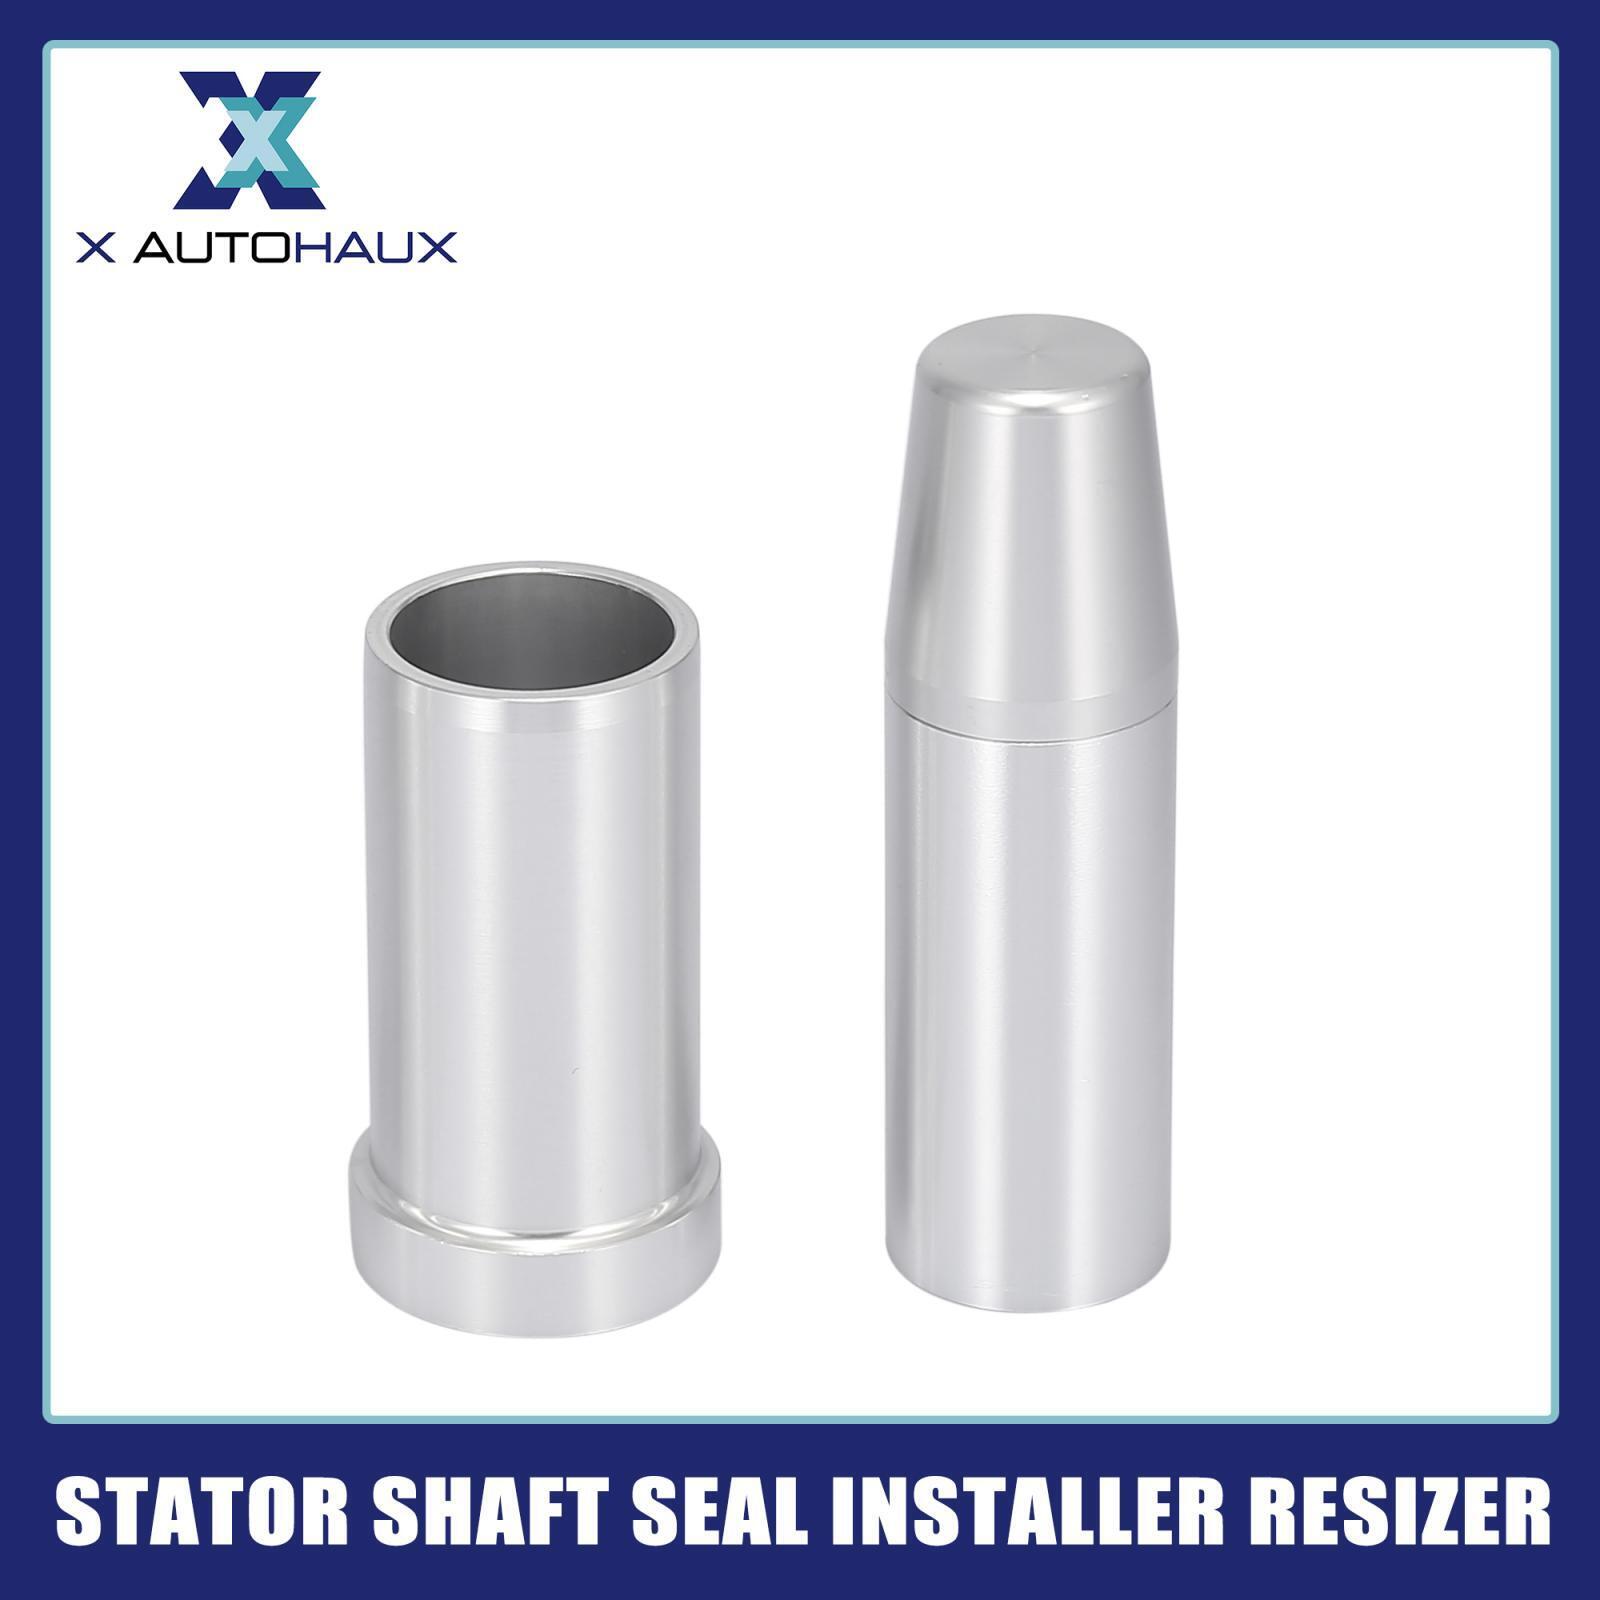 2pcs ST-1503 Stator Shaft Seal Installer Resizer for GM 700-R4 4L60 4L60E 4L65E 